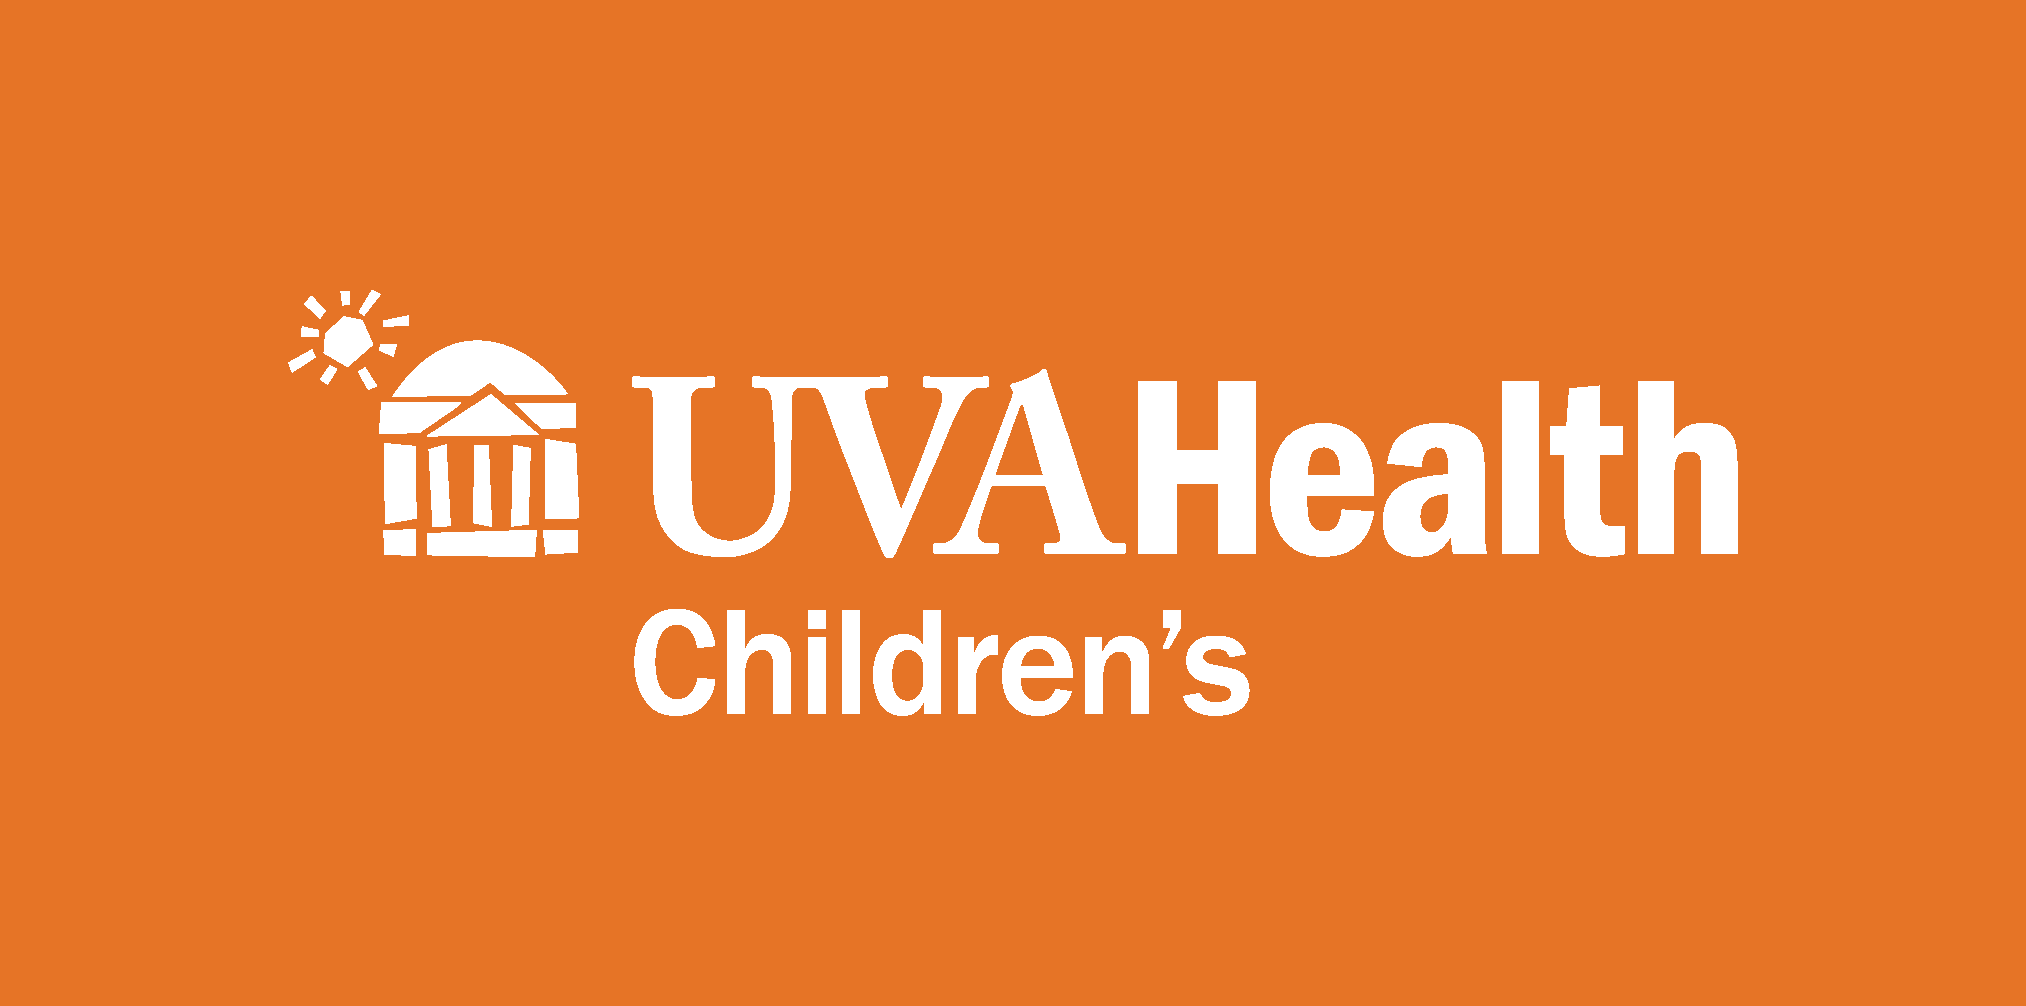 UVA Health Children's knockout logo in orange